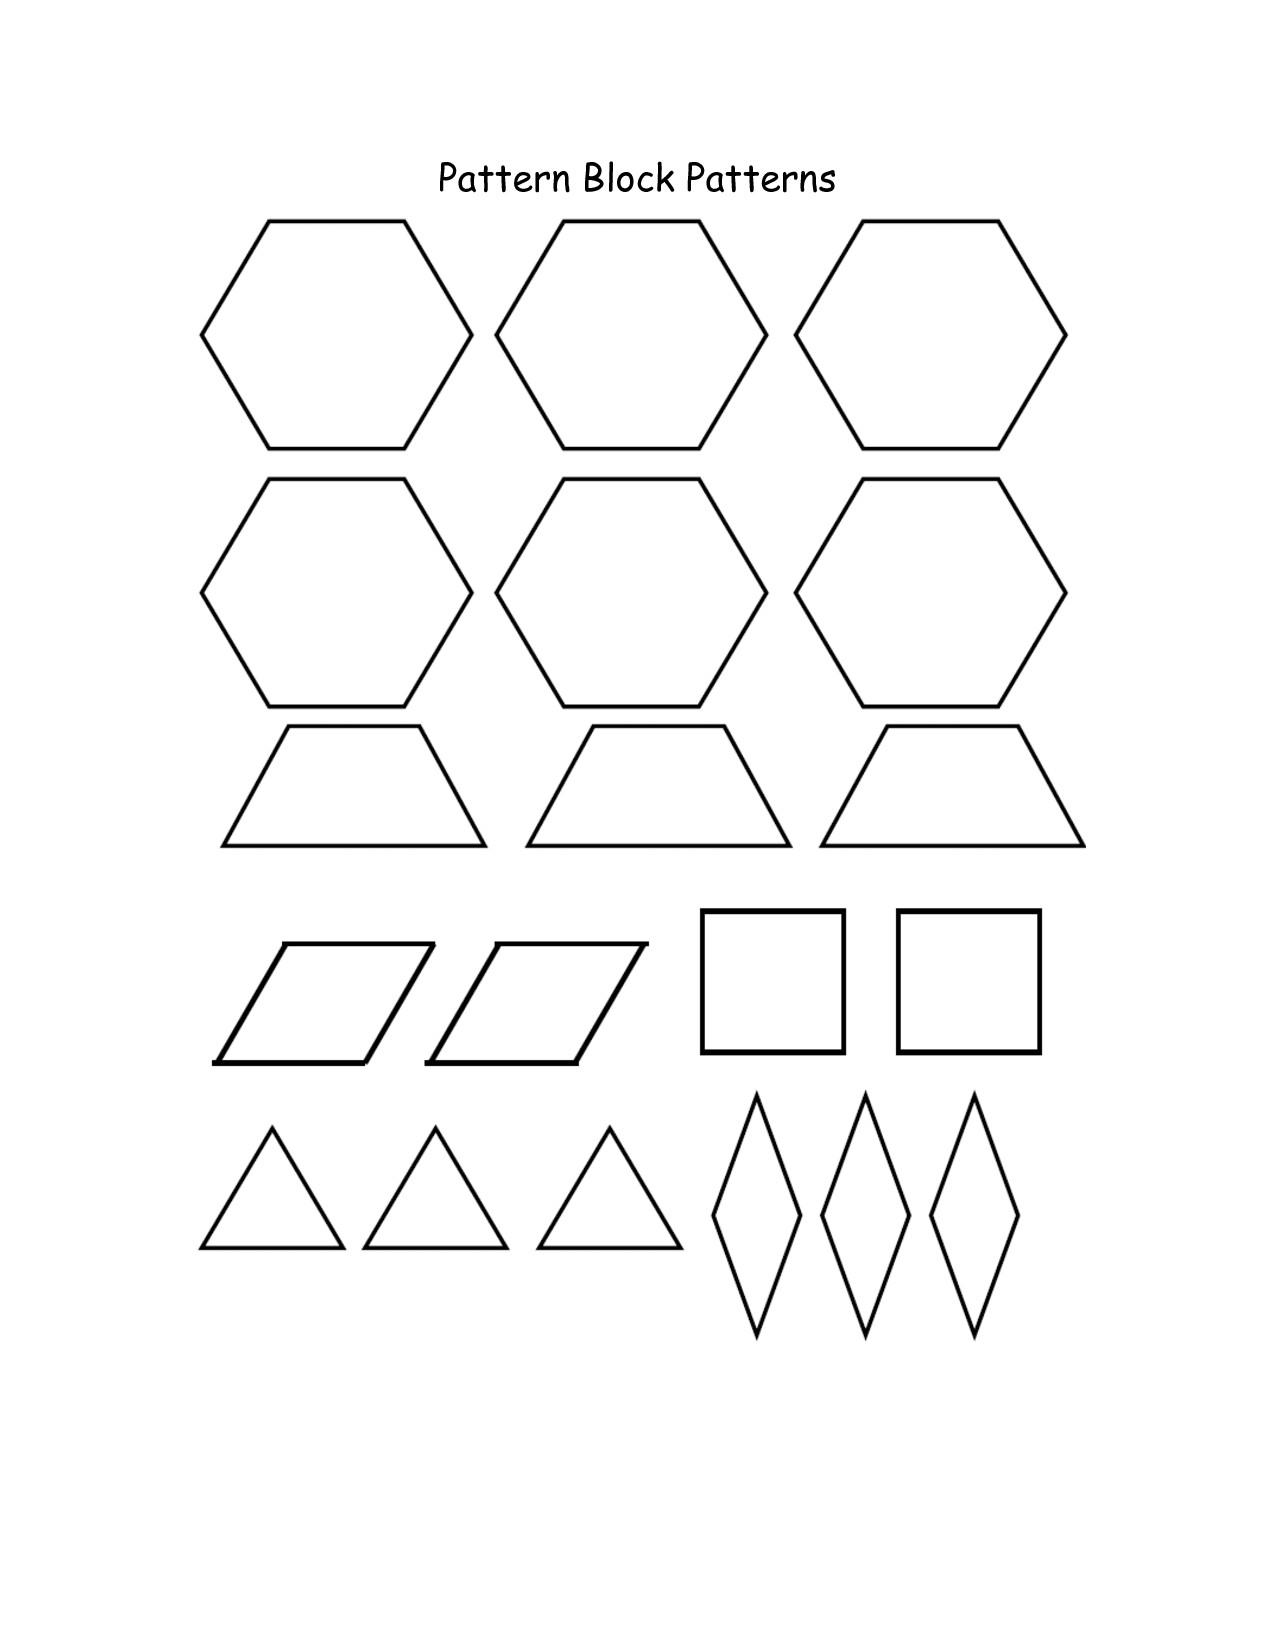 8-best-images-of-free-pattern-block-printables-pattern-block